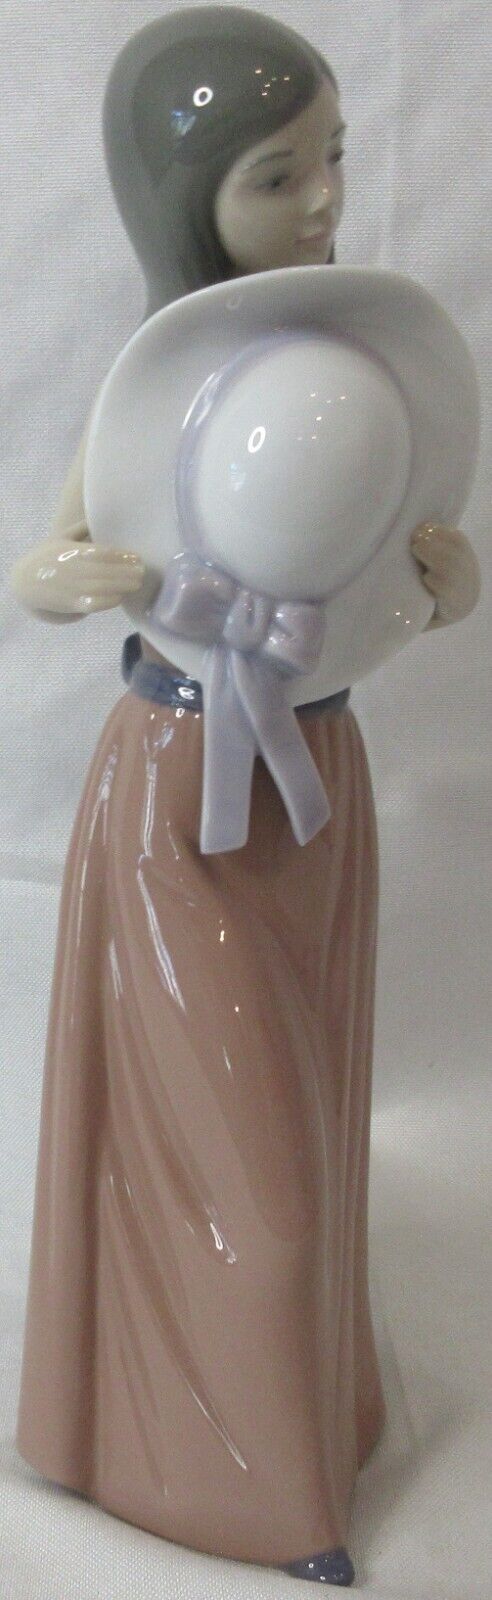 Vintage Lladro 1978 Bashful Girl In Pink Dress w/ Sun Hat #5007 Figurine Retired